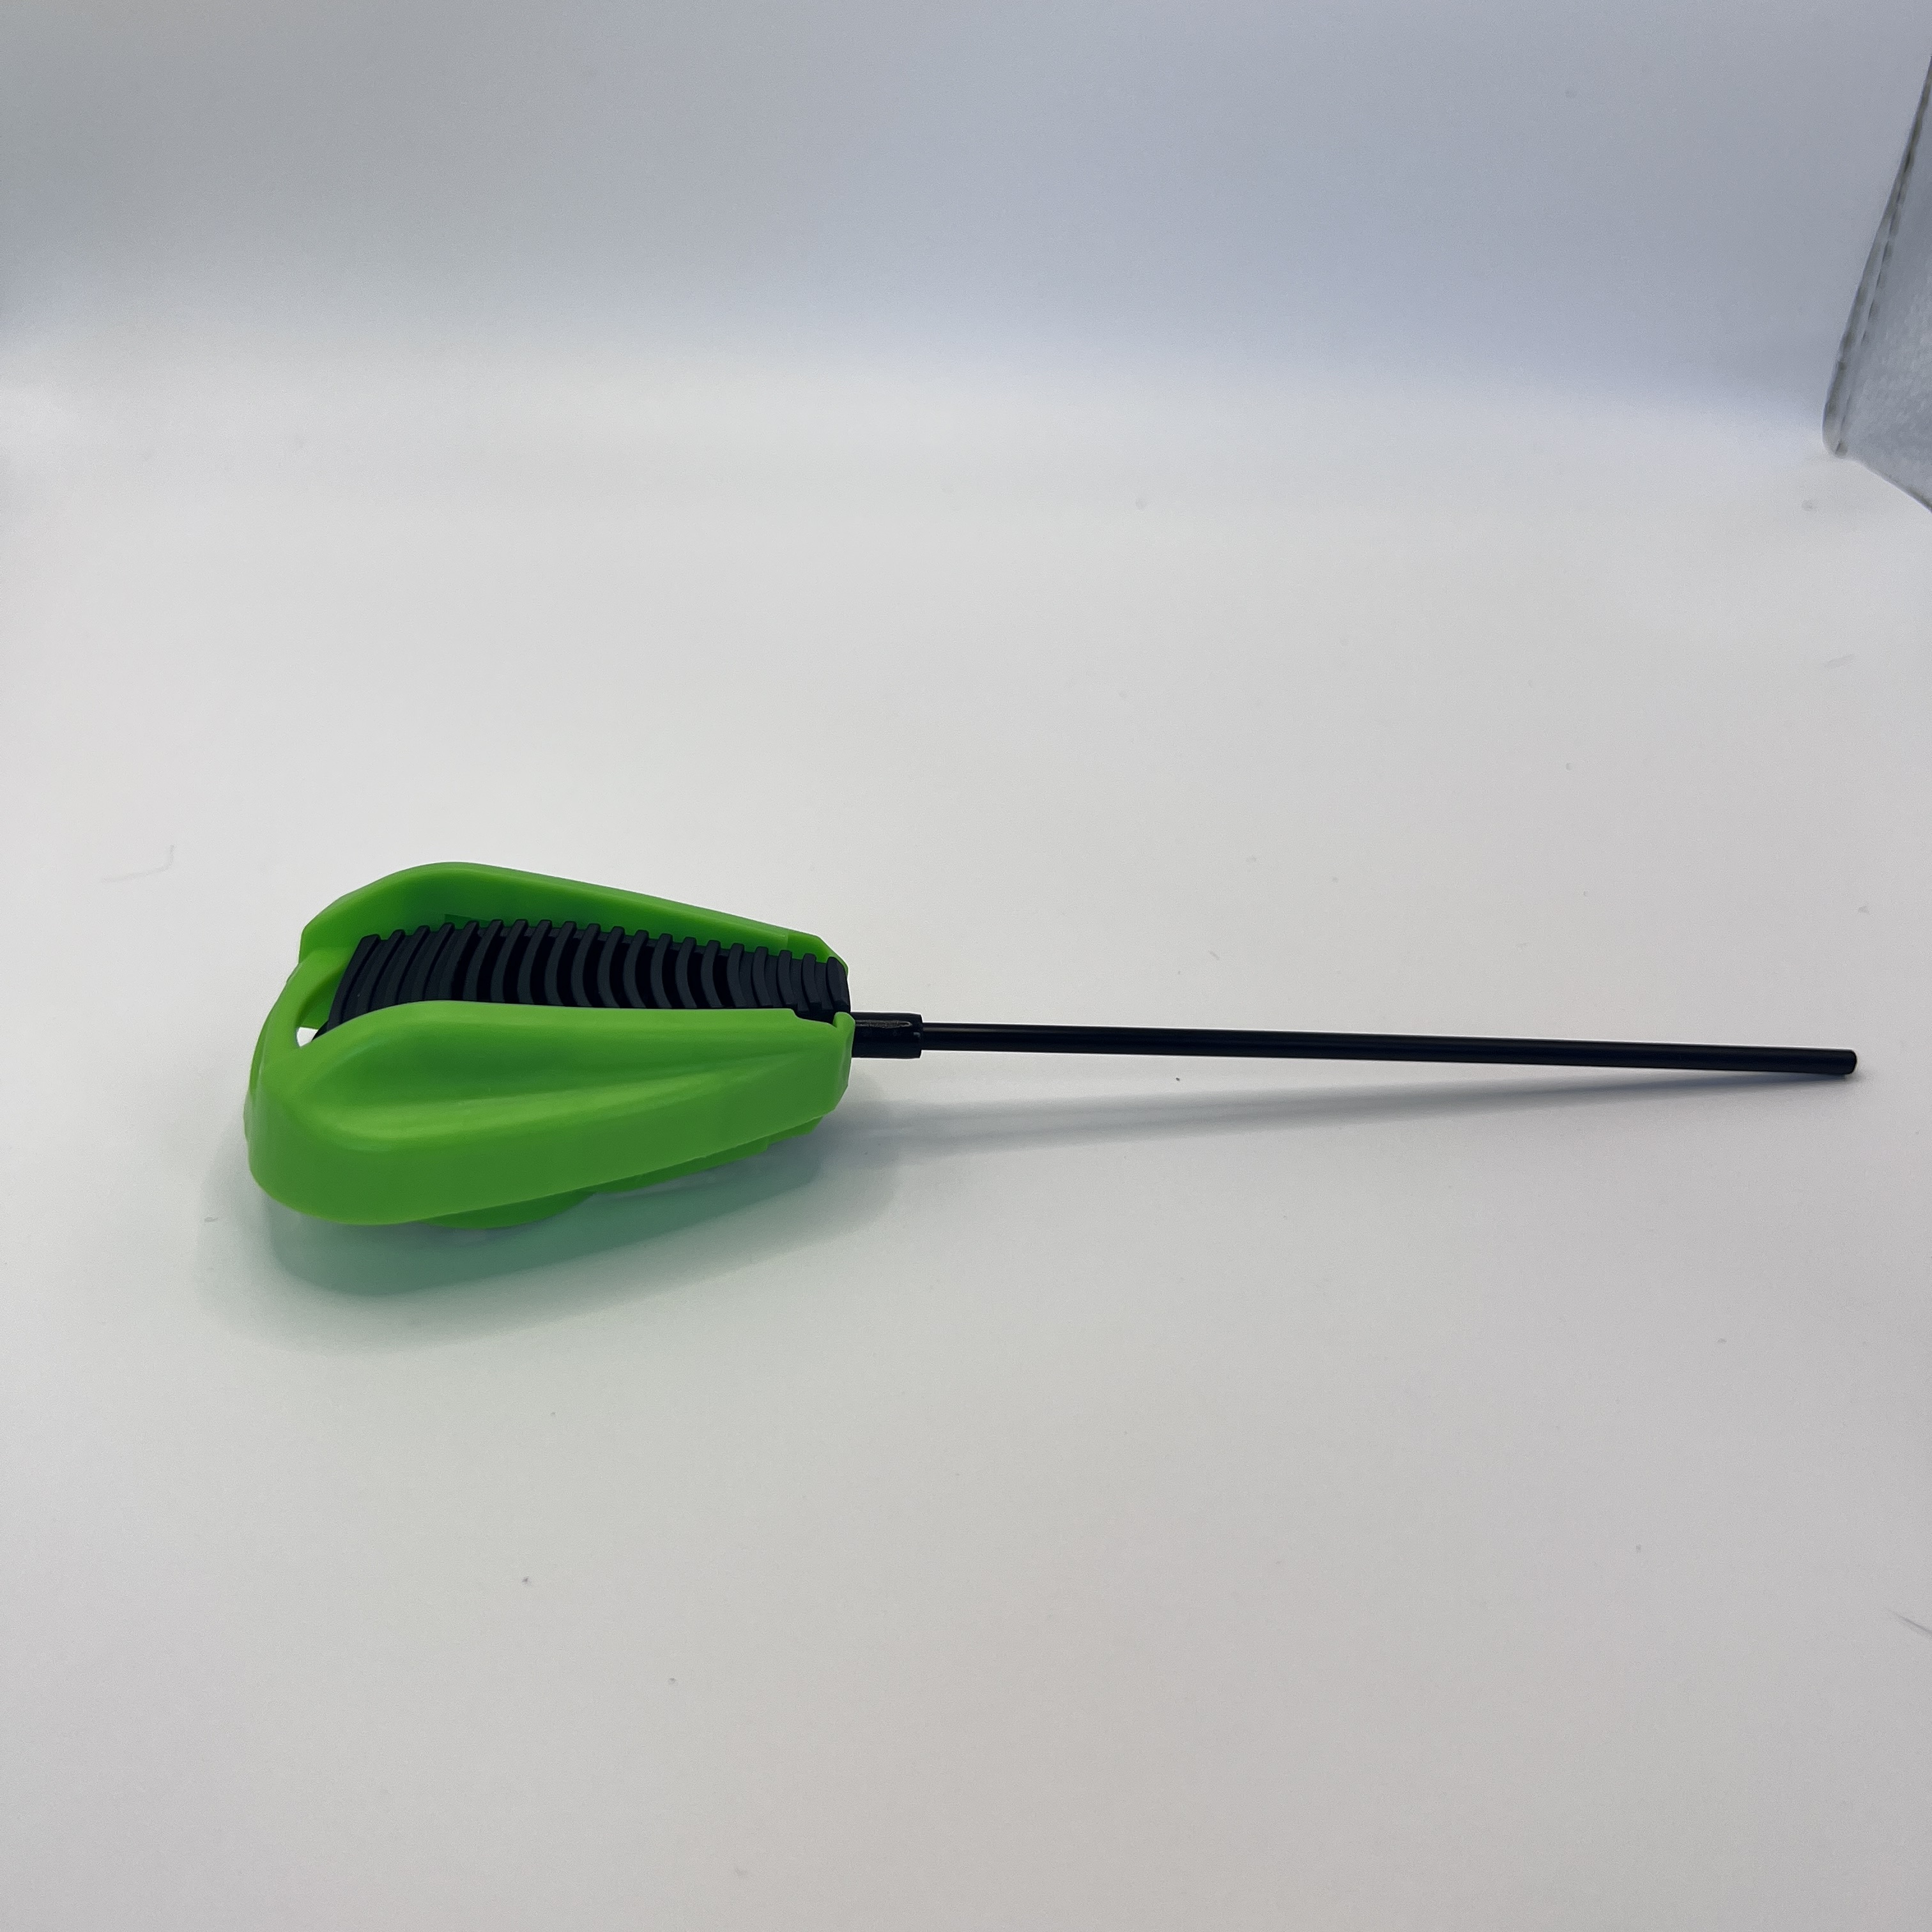  Adjustable Aerosol Spray Nozzle for Gardening - Versatile and Efficient